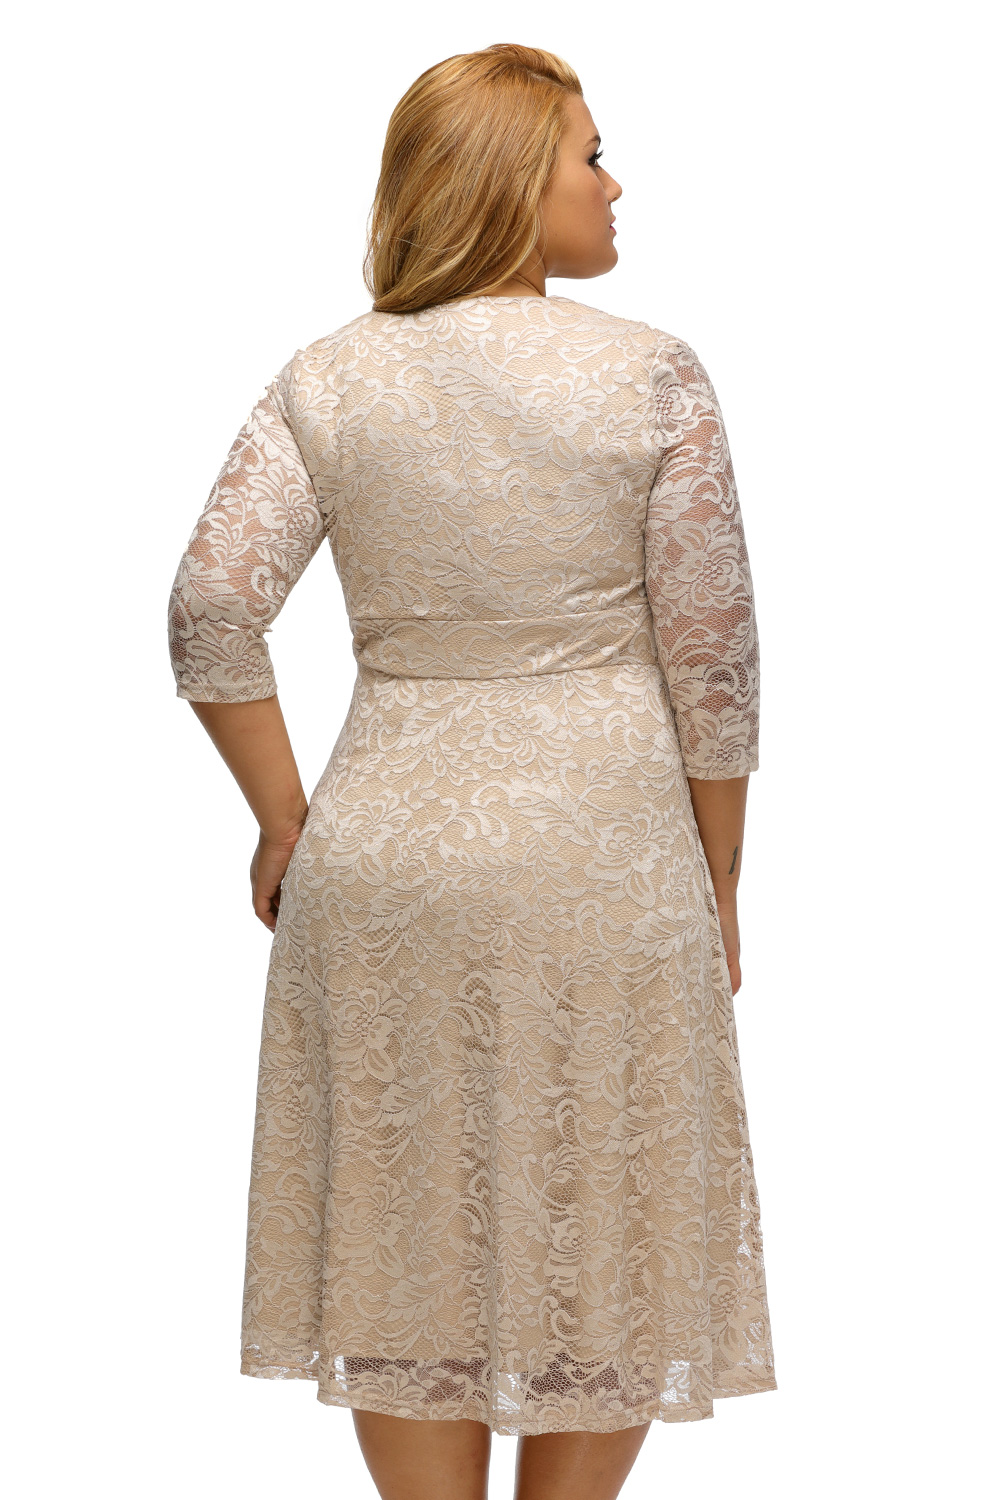 BY61442-18 Apricot Plus Size Surplice Lace Formal Skater Dress